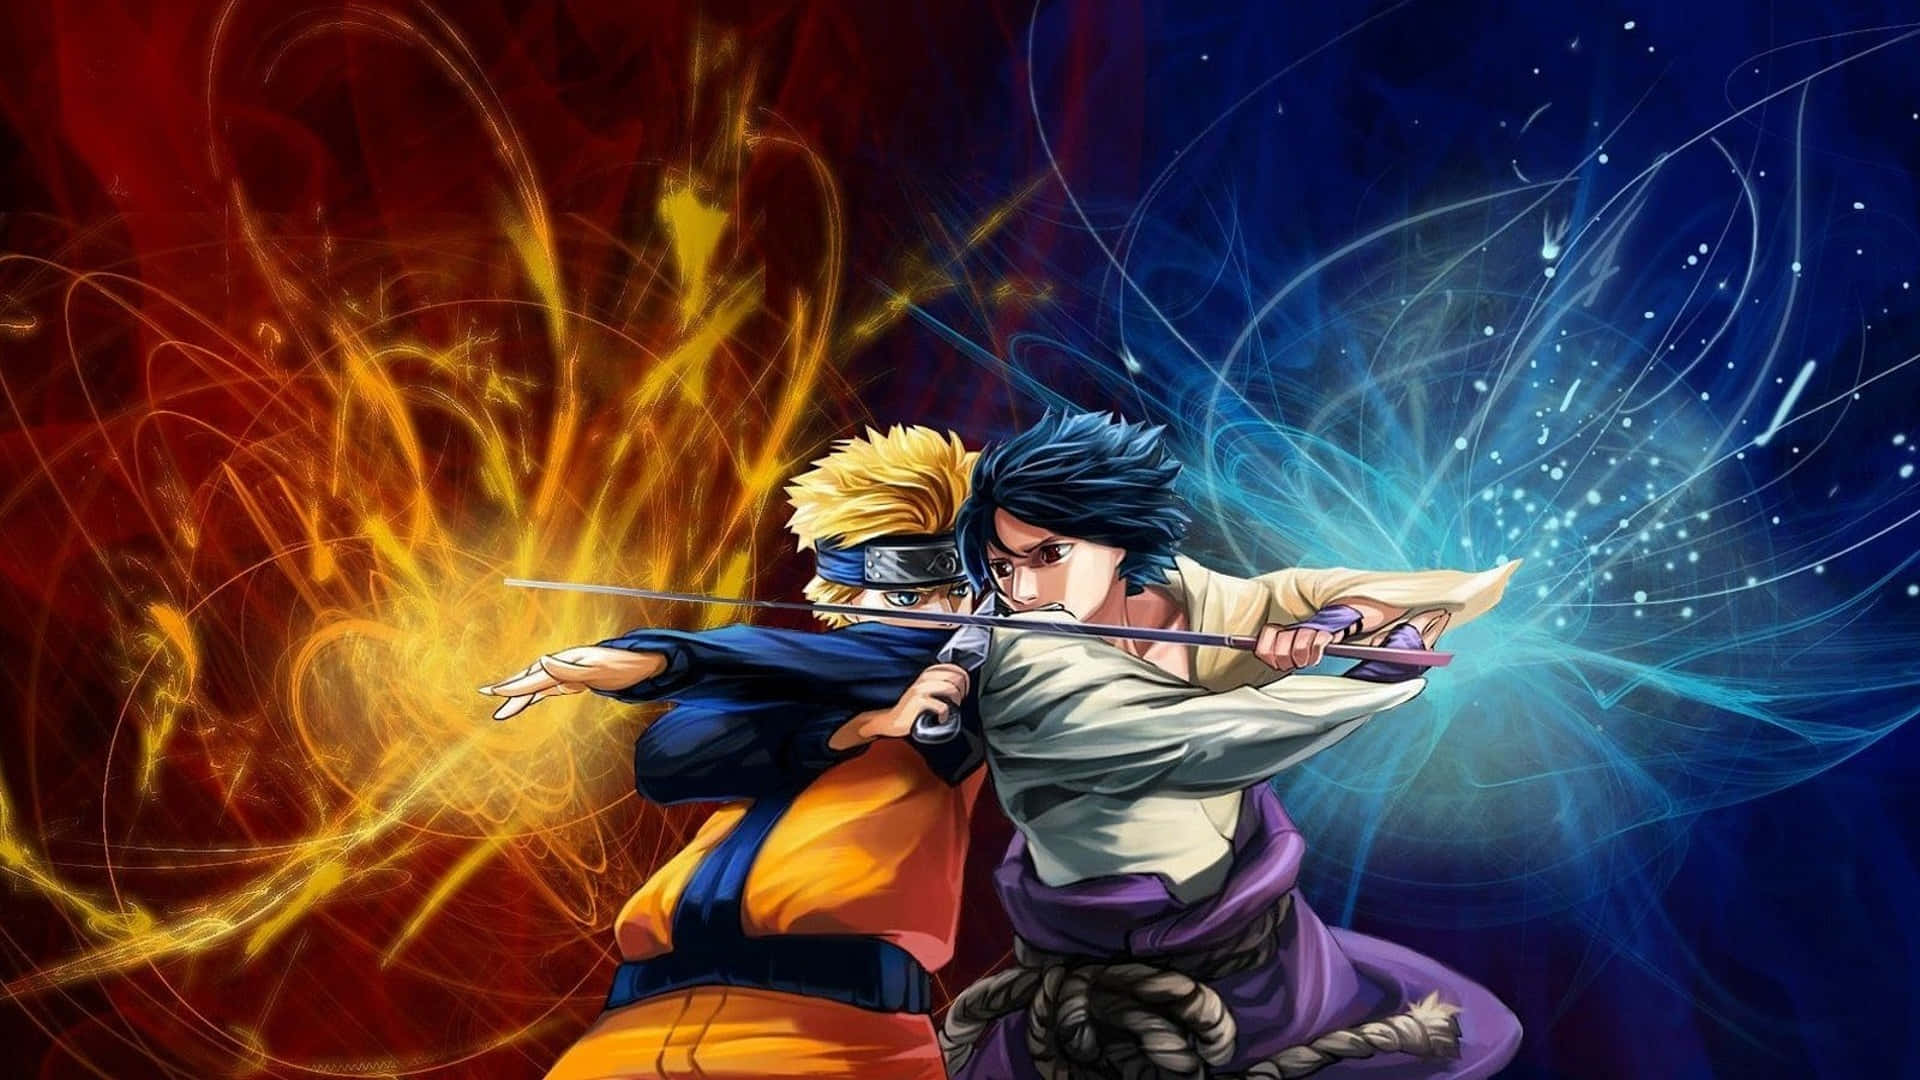 "It's Time for Adventure!", Naruto Uzumaki Wallpaper